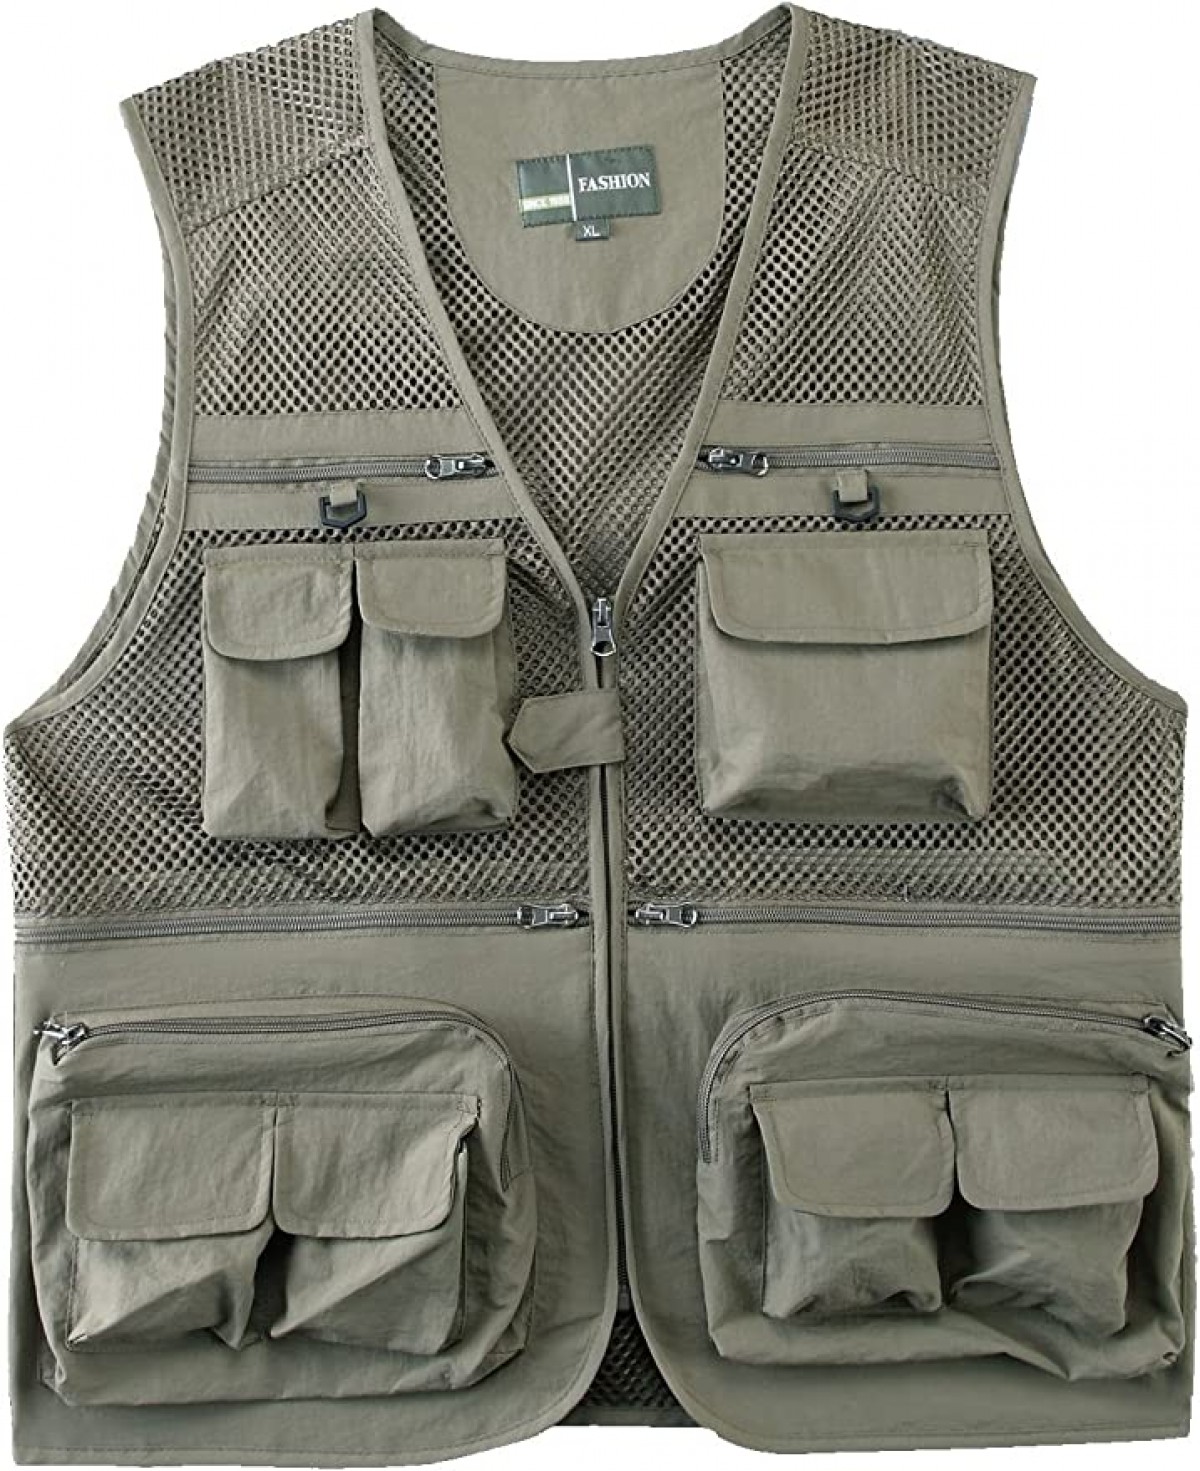 ROK9 - Training Vest